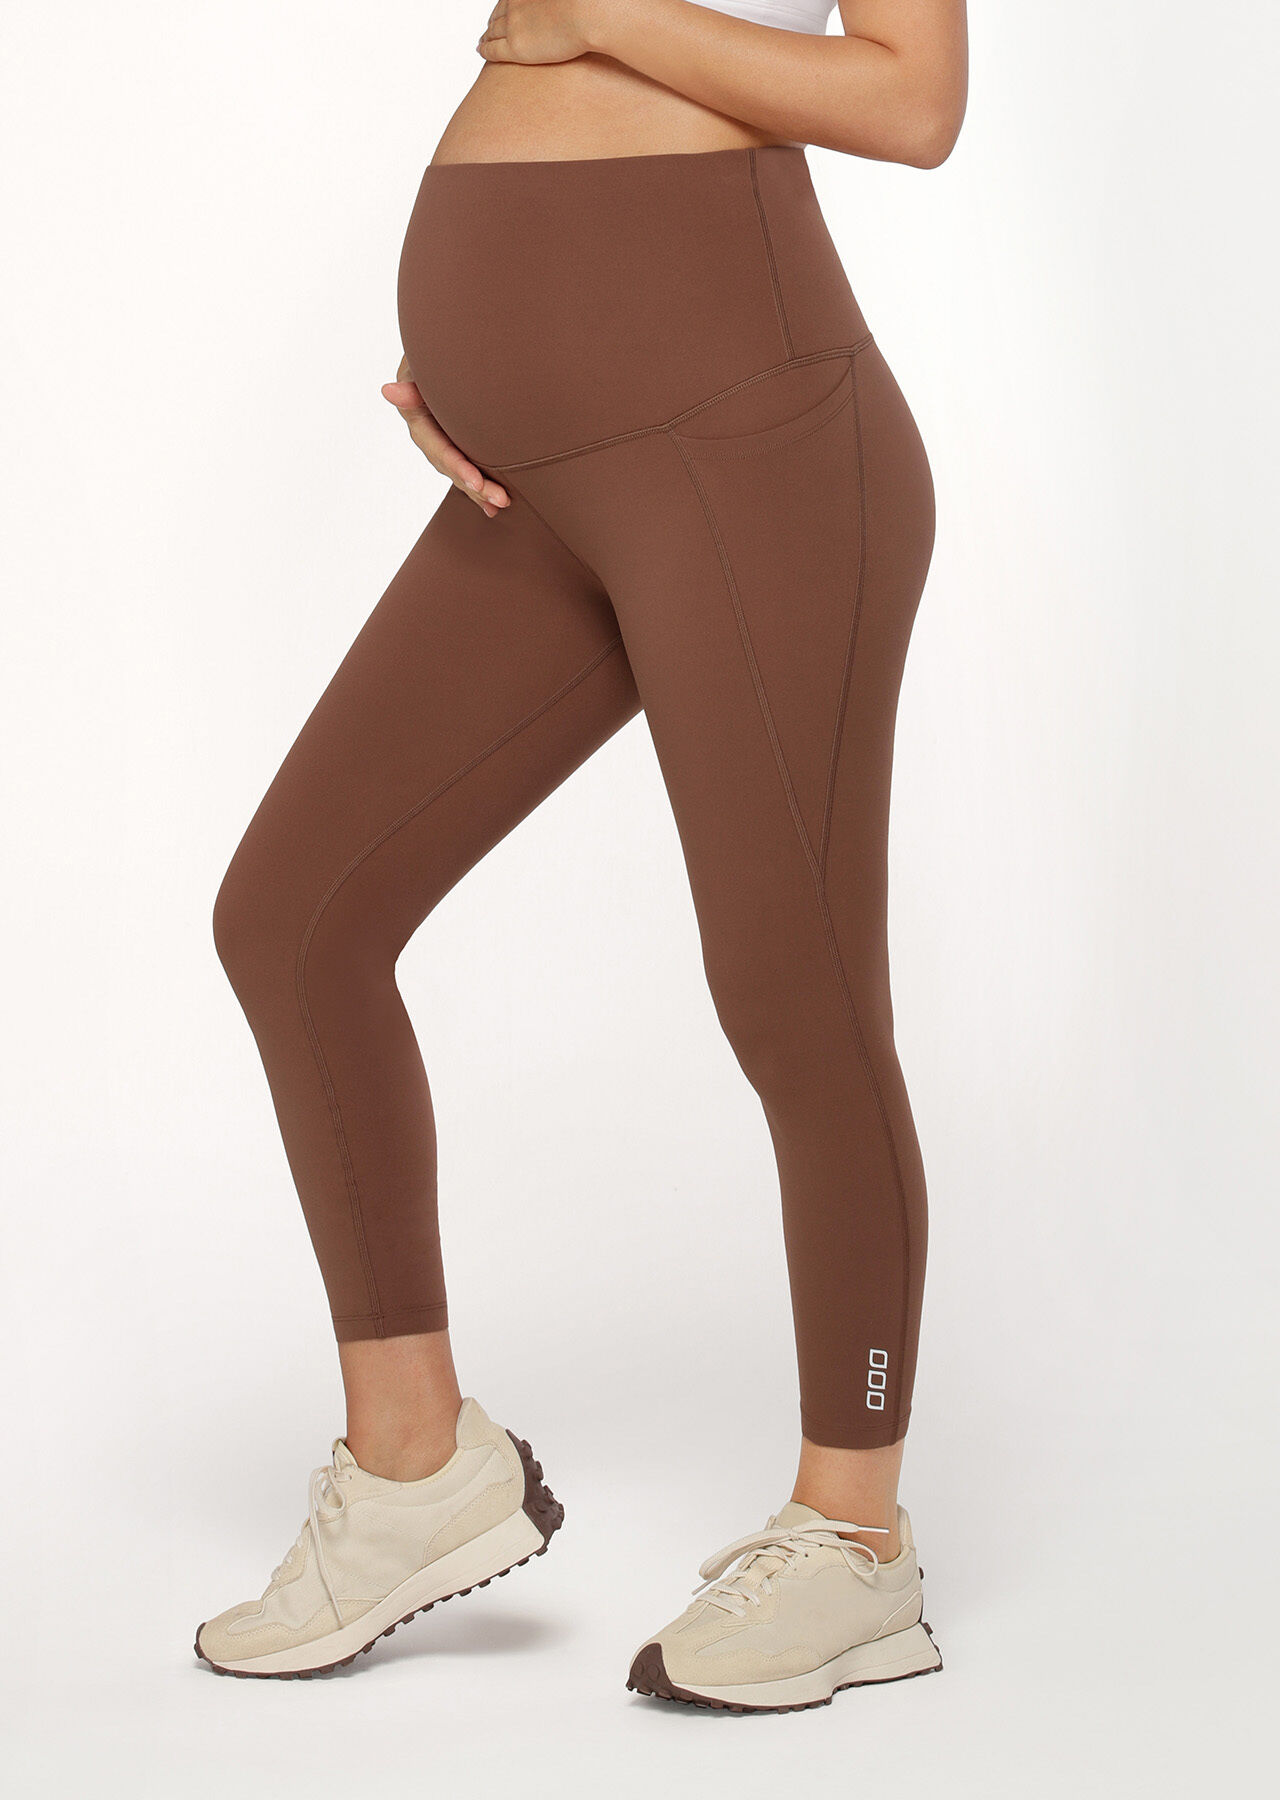 Tdoqot Leggings with Pockets for Women- Stretch Casual Slim Fit Yoga Leggings  Brown - Walmart.com